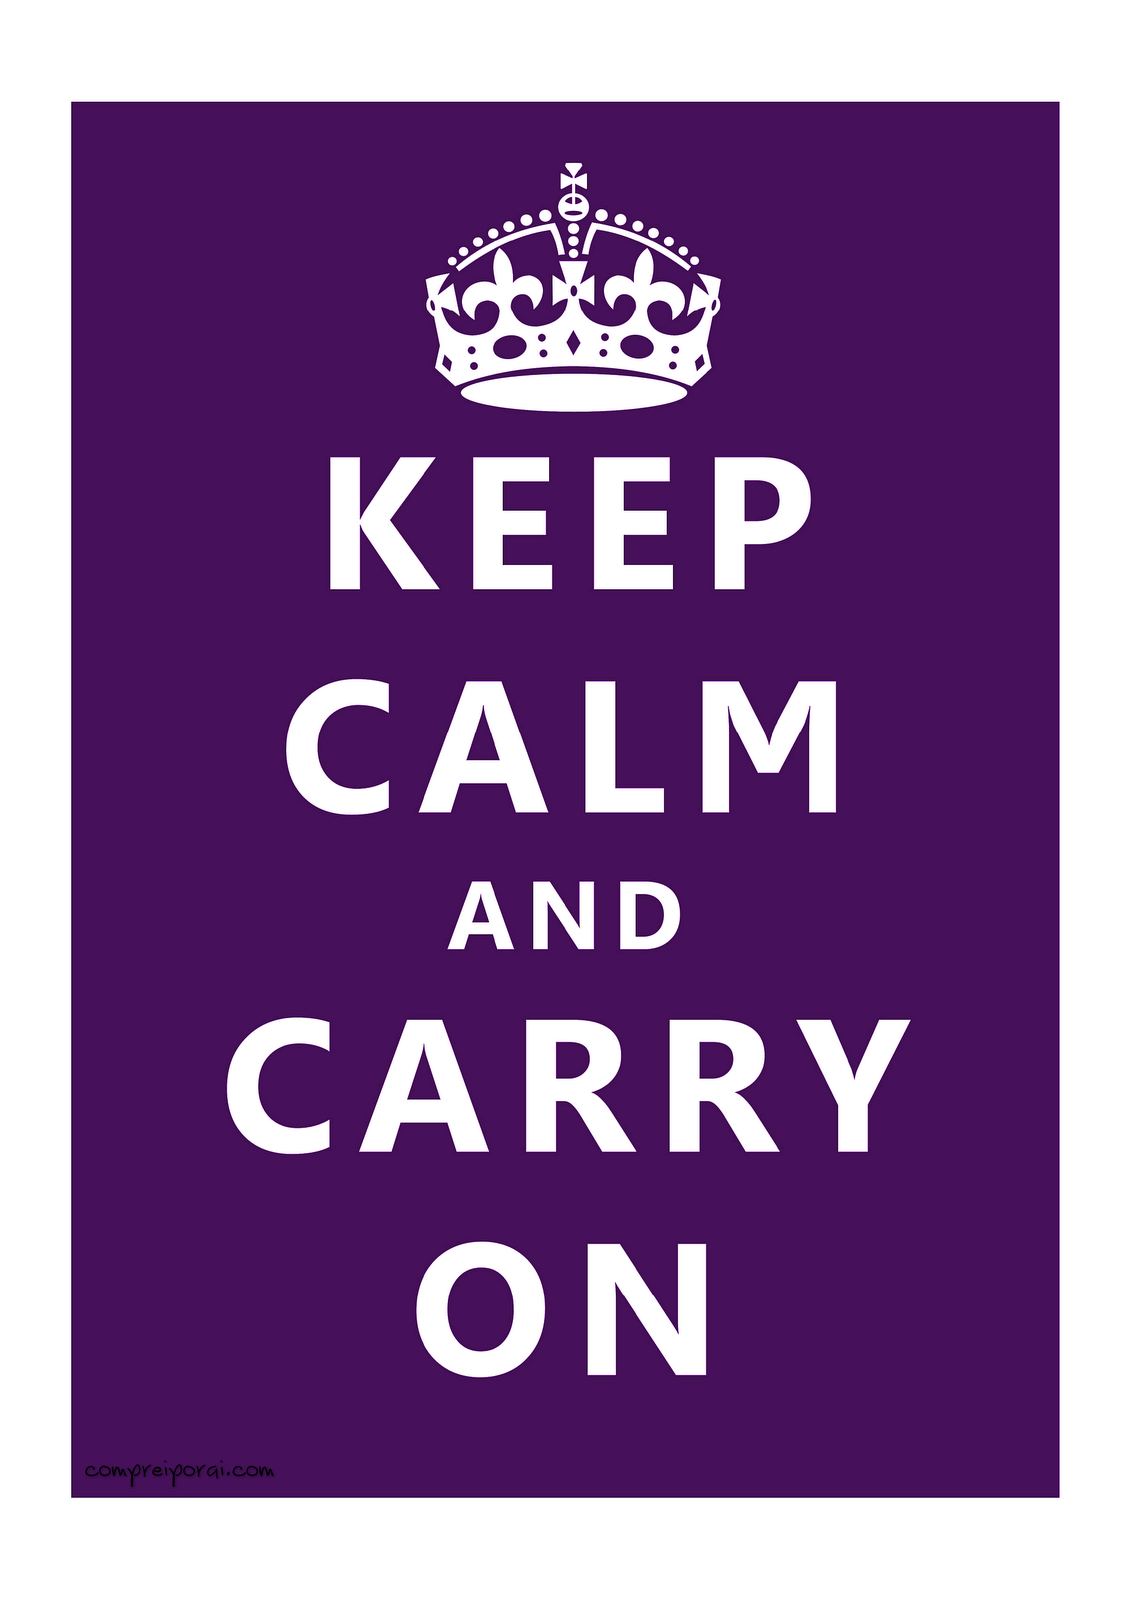 Keep Calm and carry. Keep Calm and carry on. Постер keep Calm and carry on. Keep Calm and carry on обои.